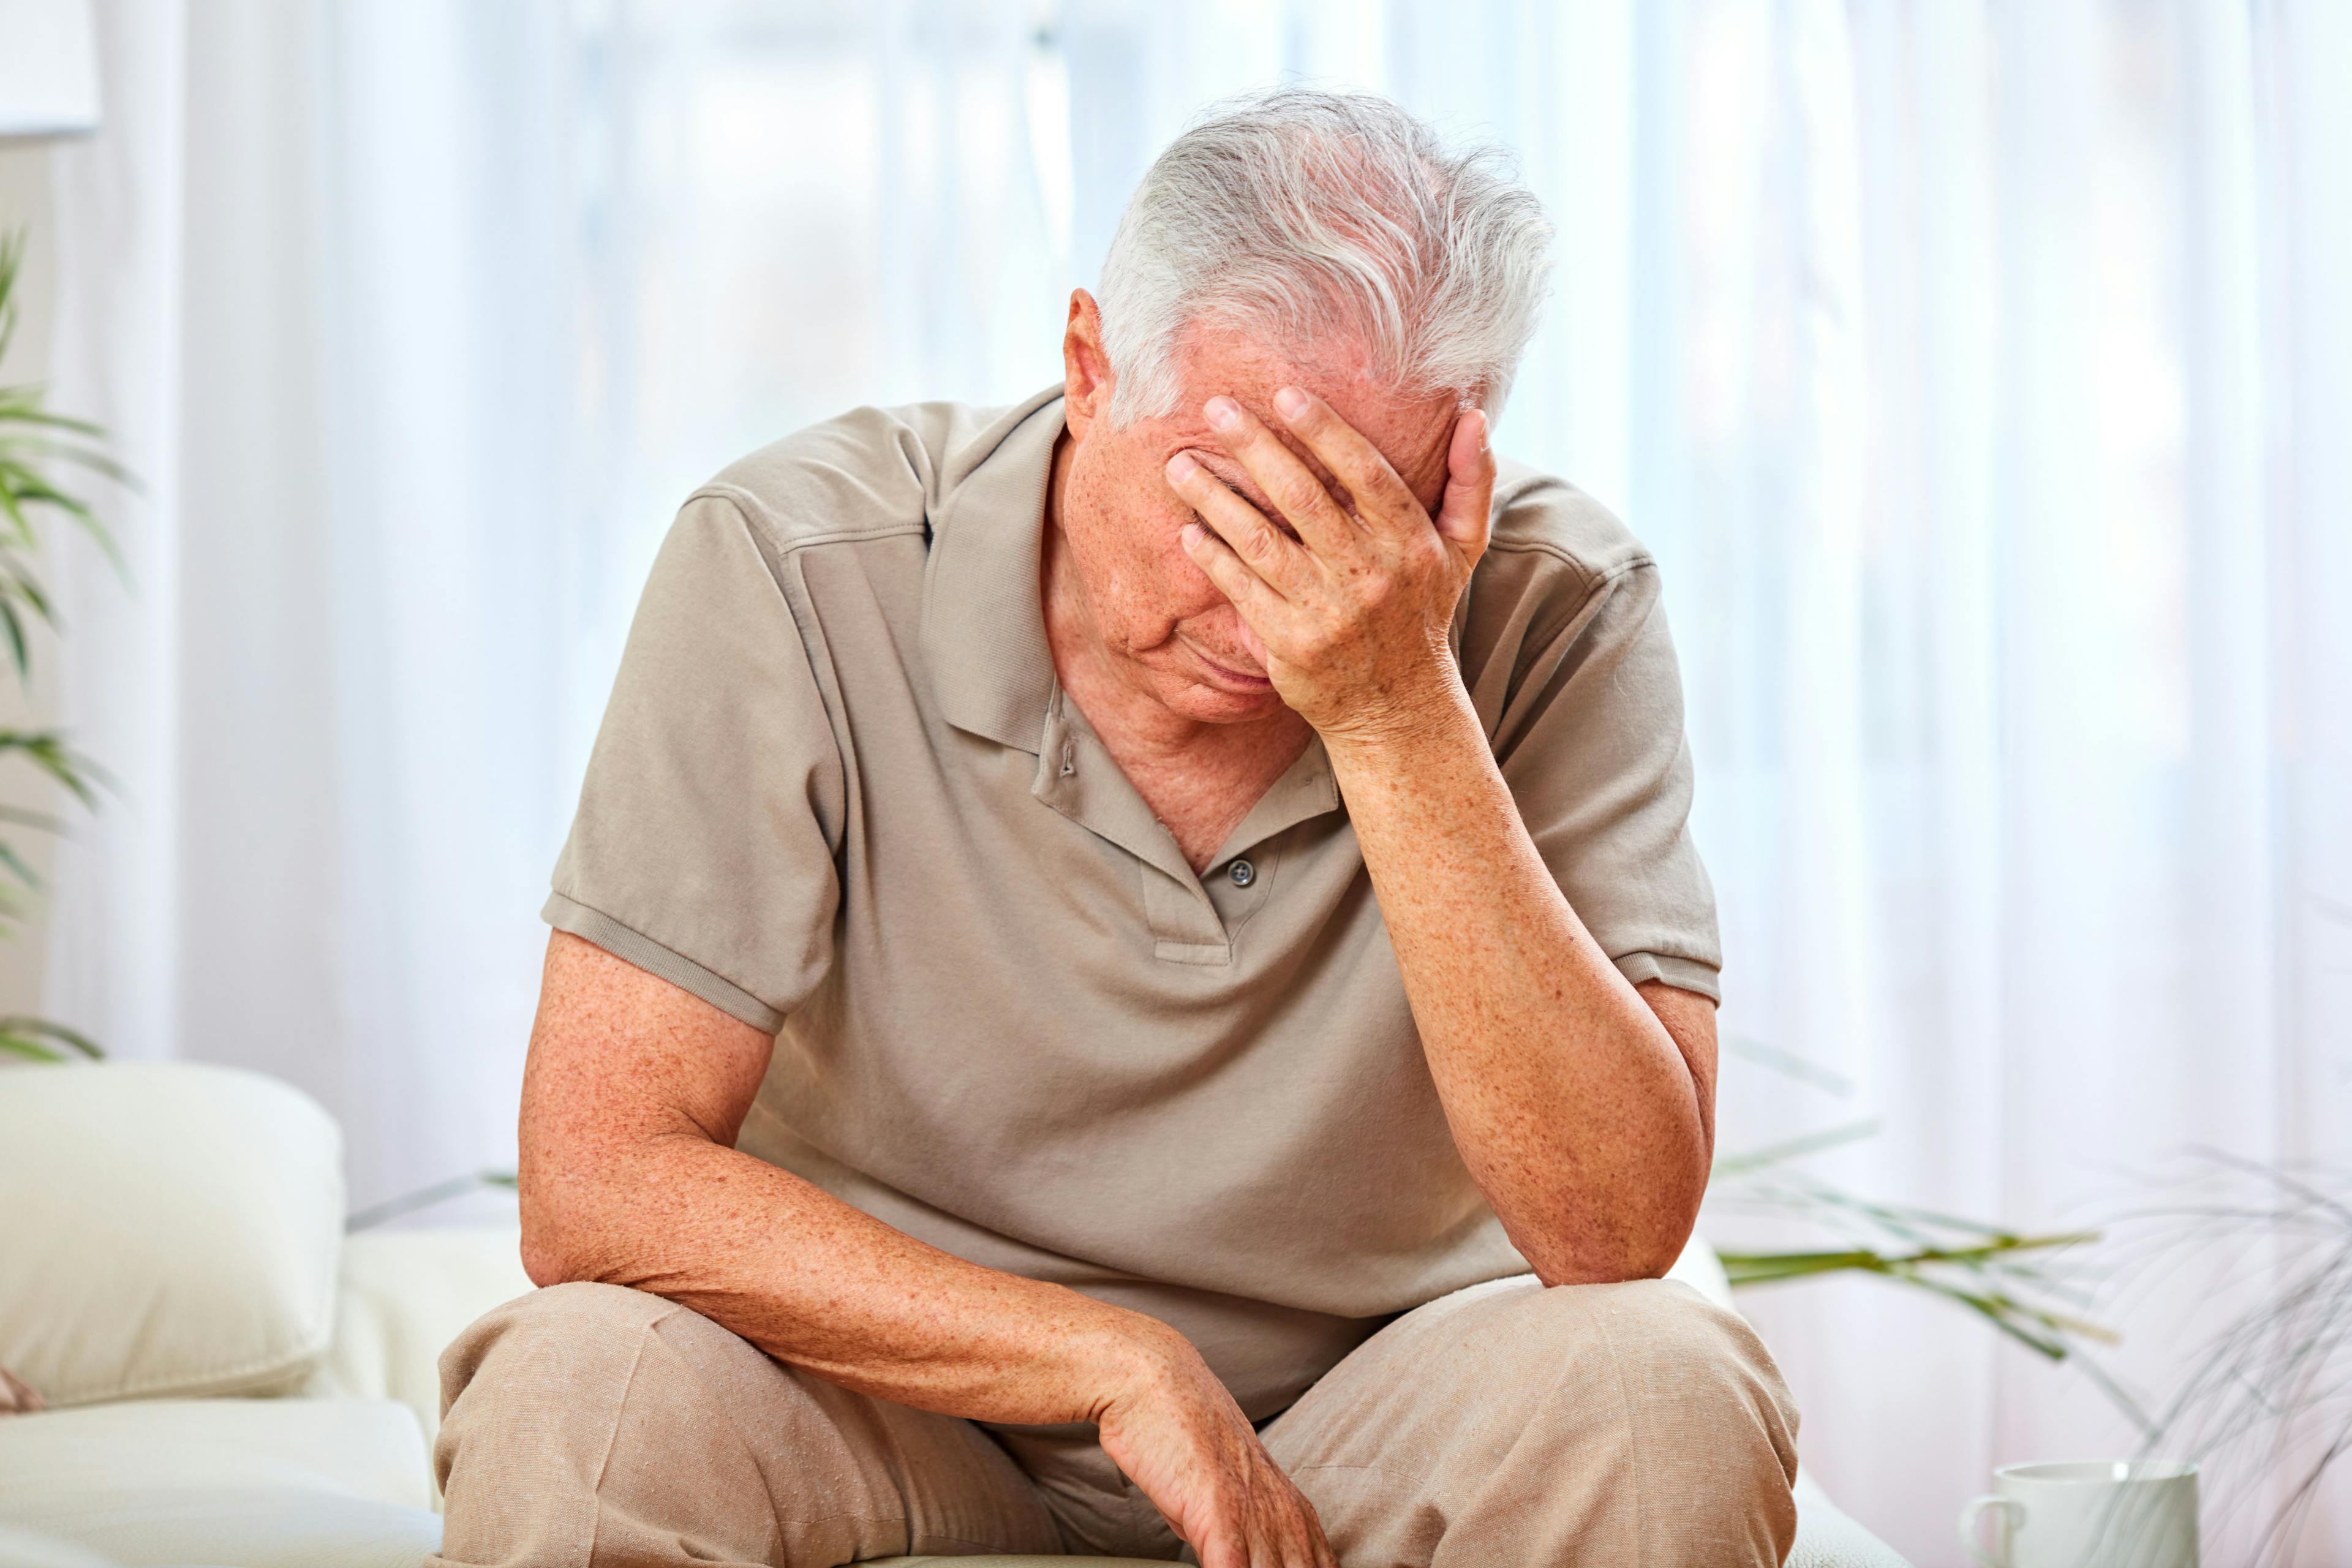 Depression Worsens Symptom Burden in Patients With MPNs, Study Says